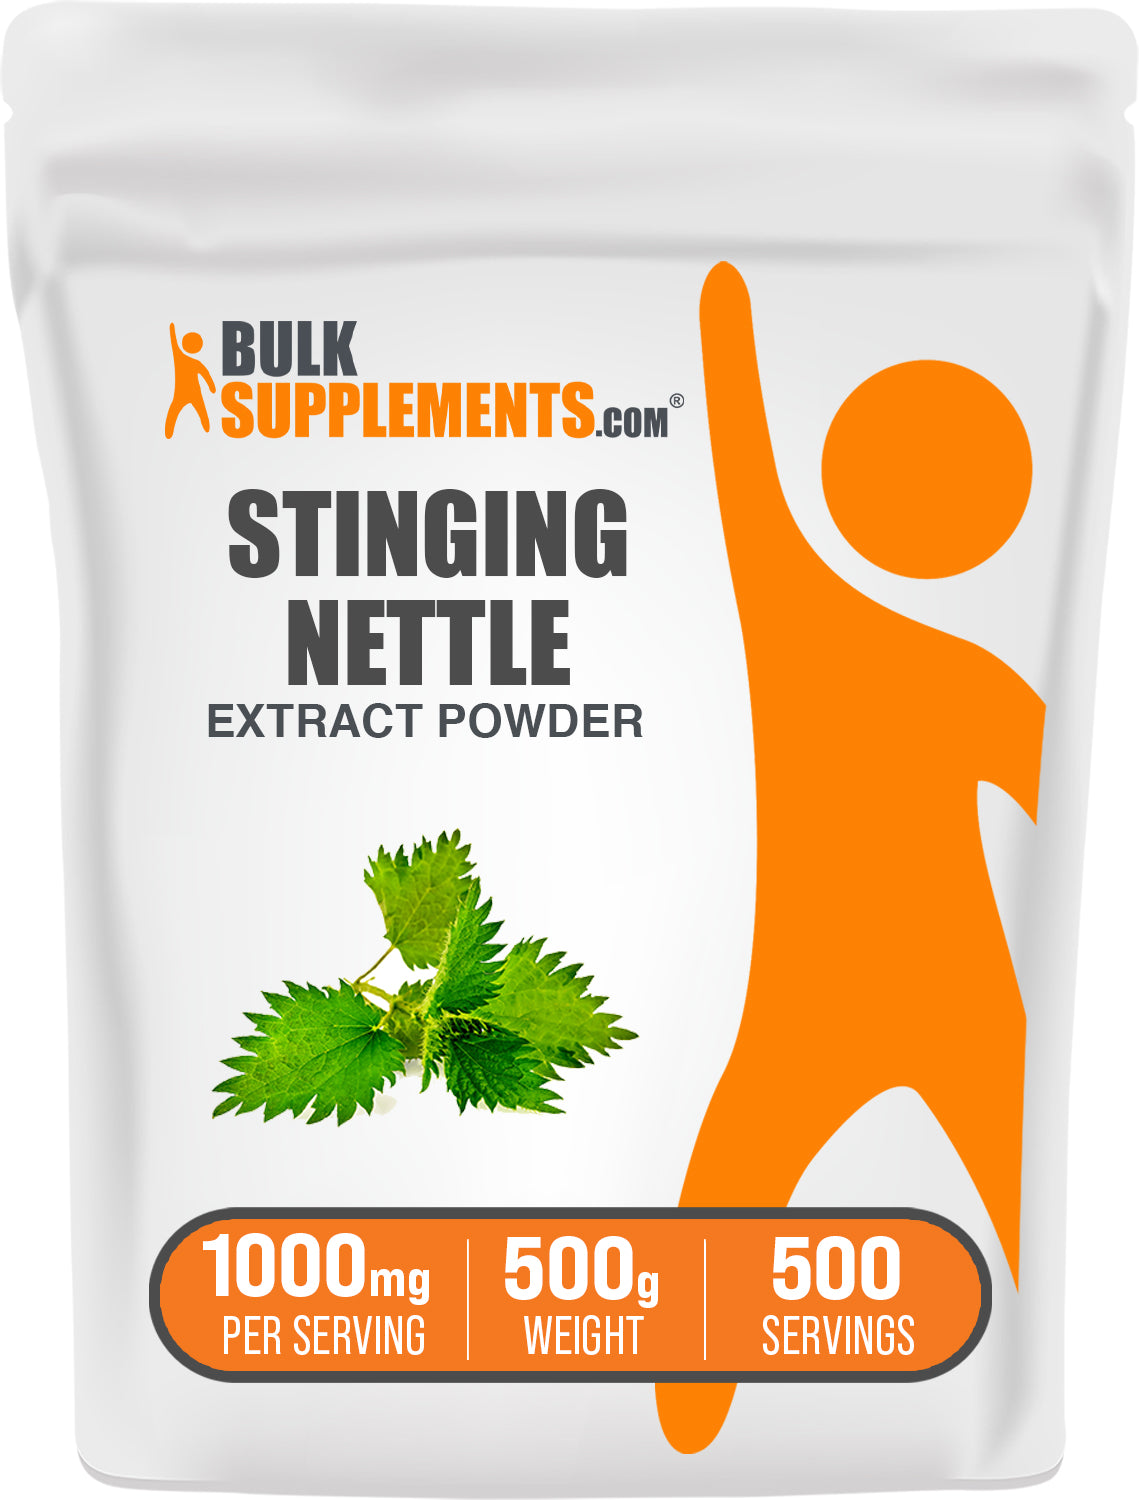 BulkSupplements.com Stinging Nettle Extract Powder 500g bag